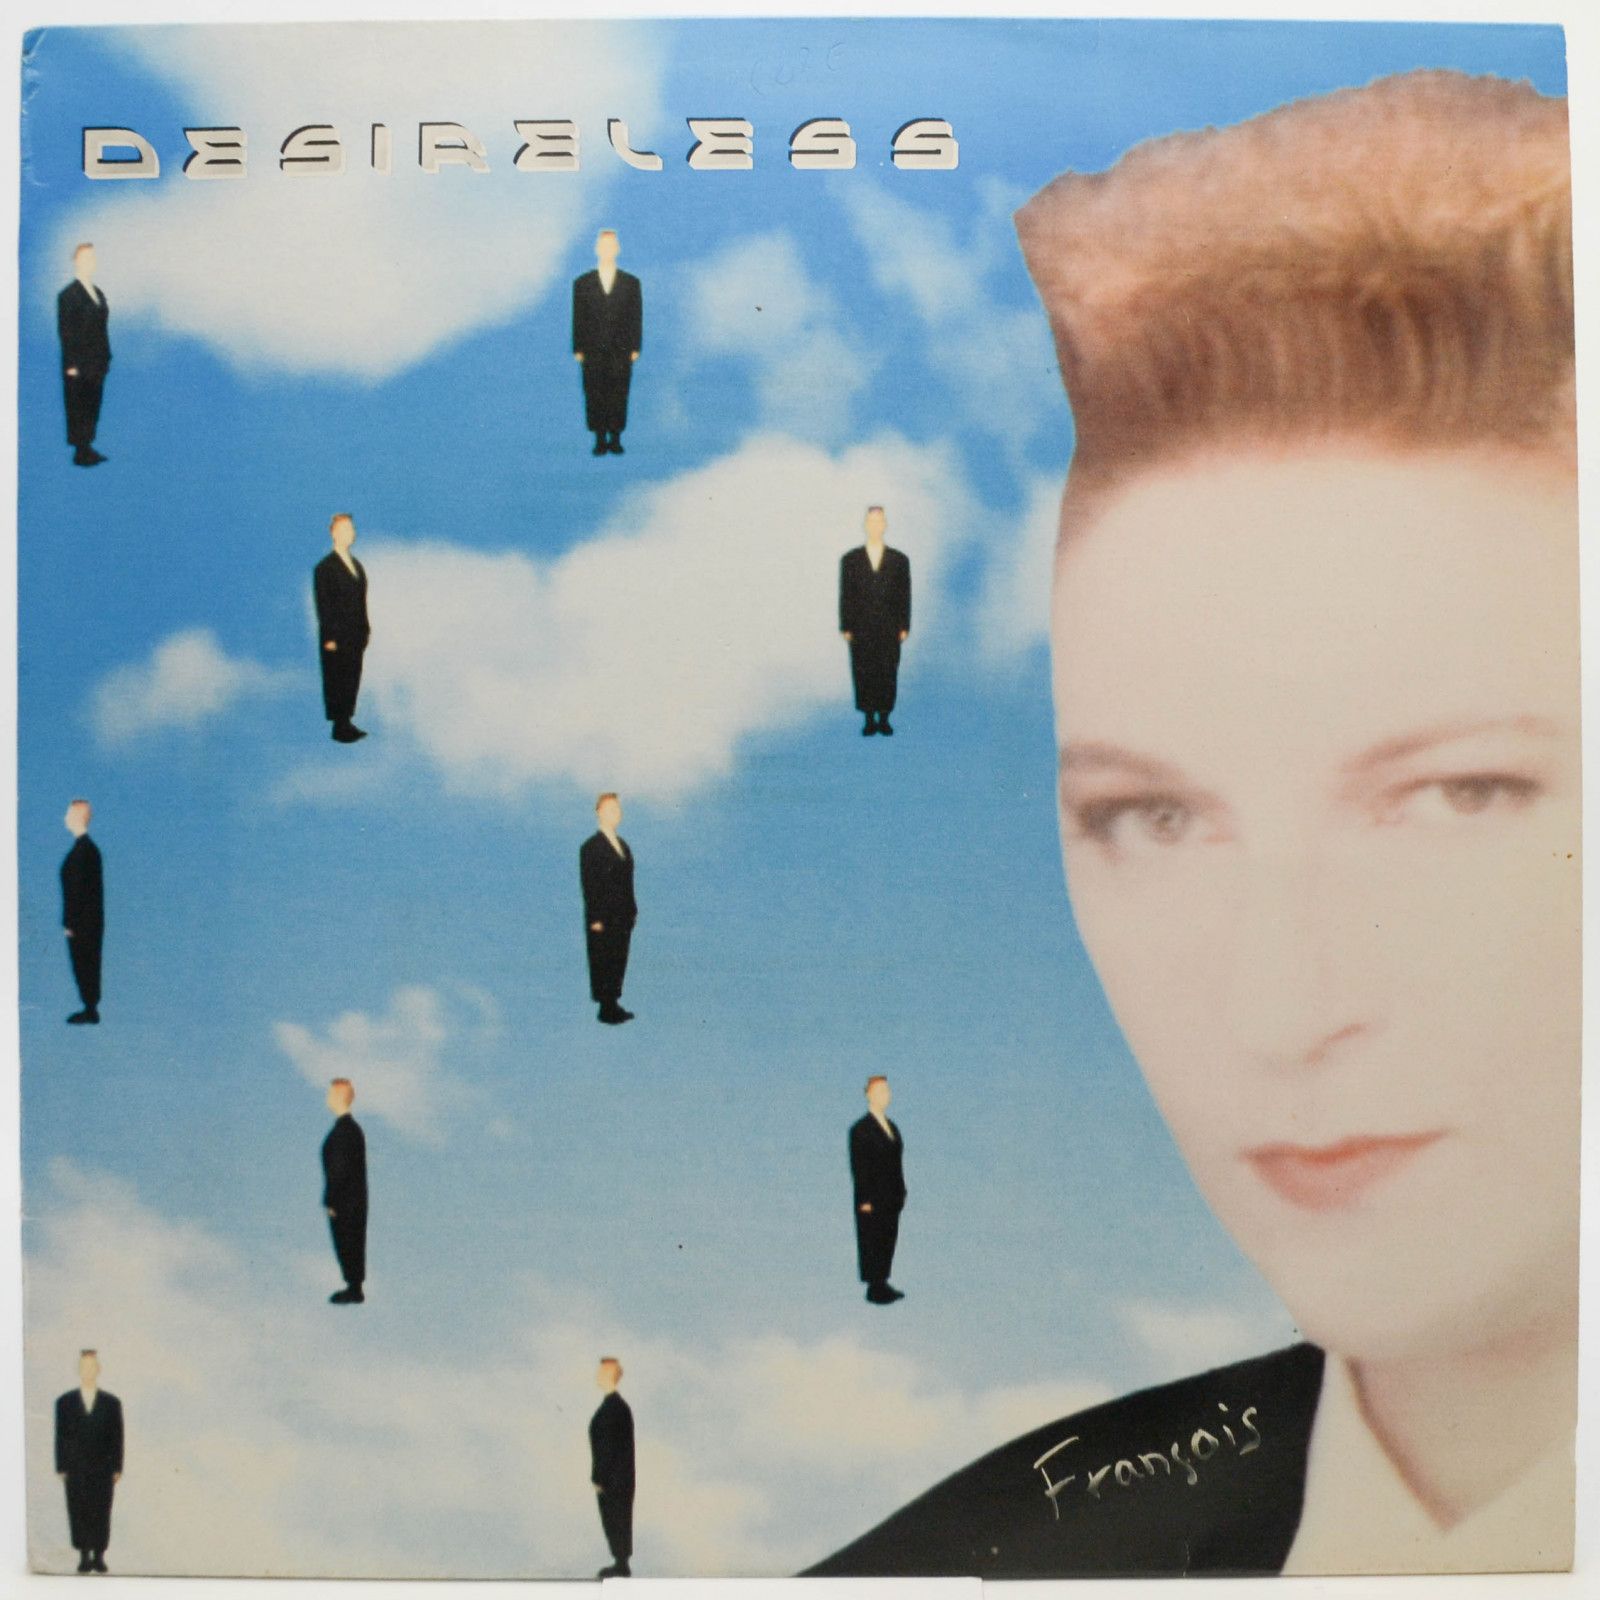 Desireless — François, 1989